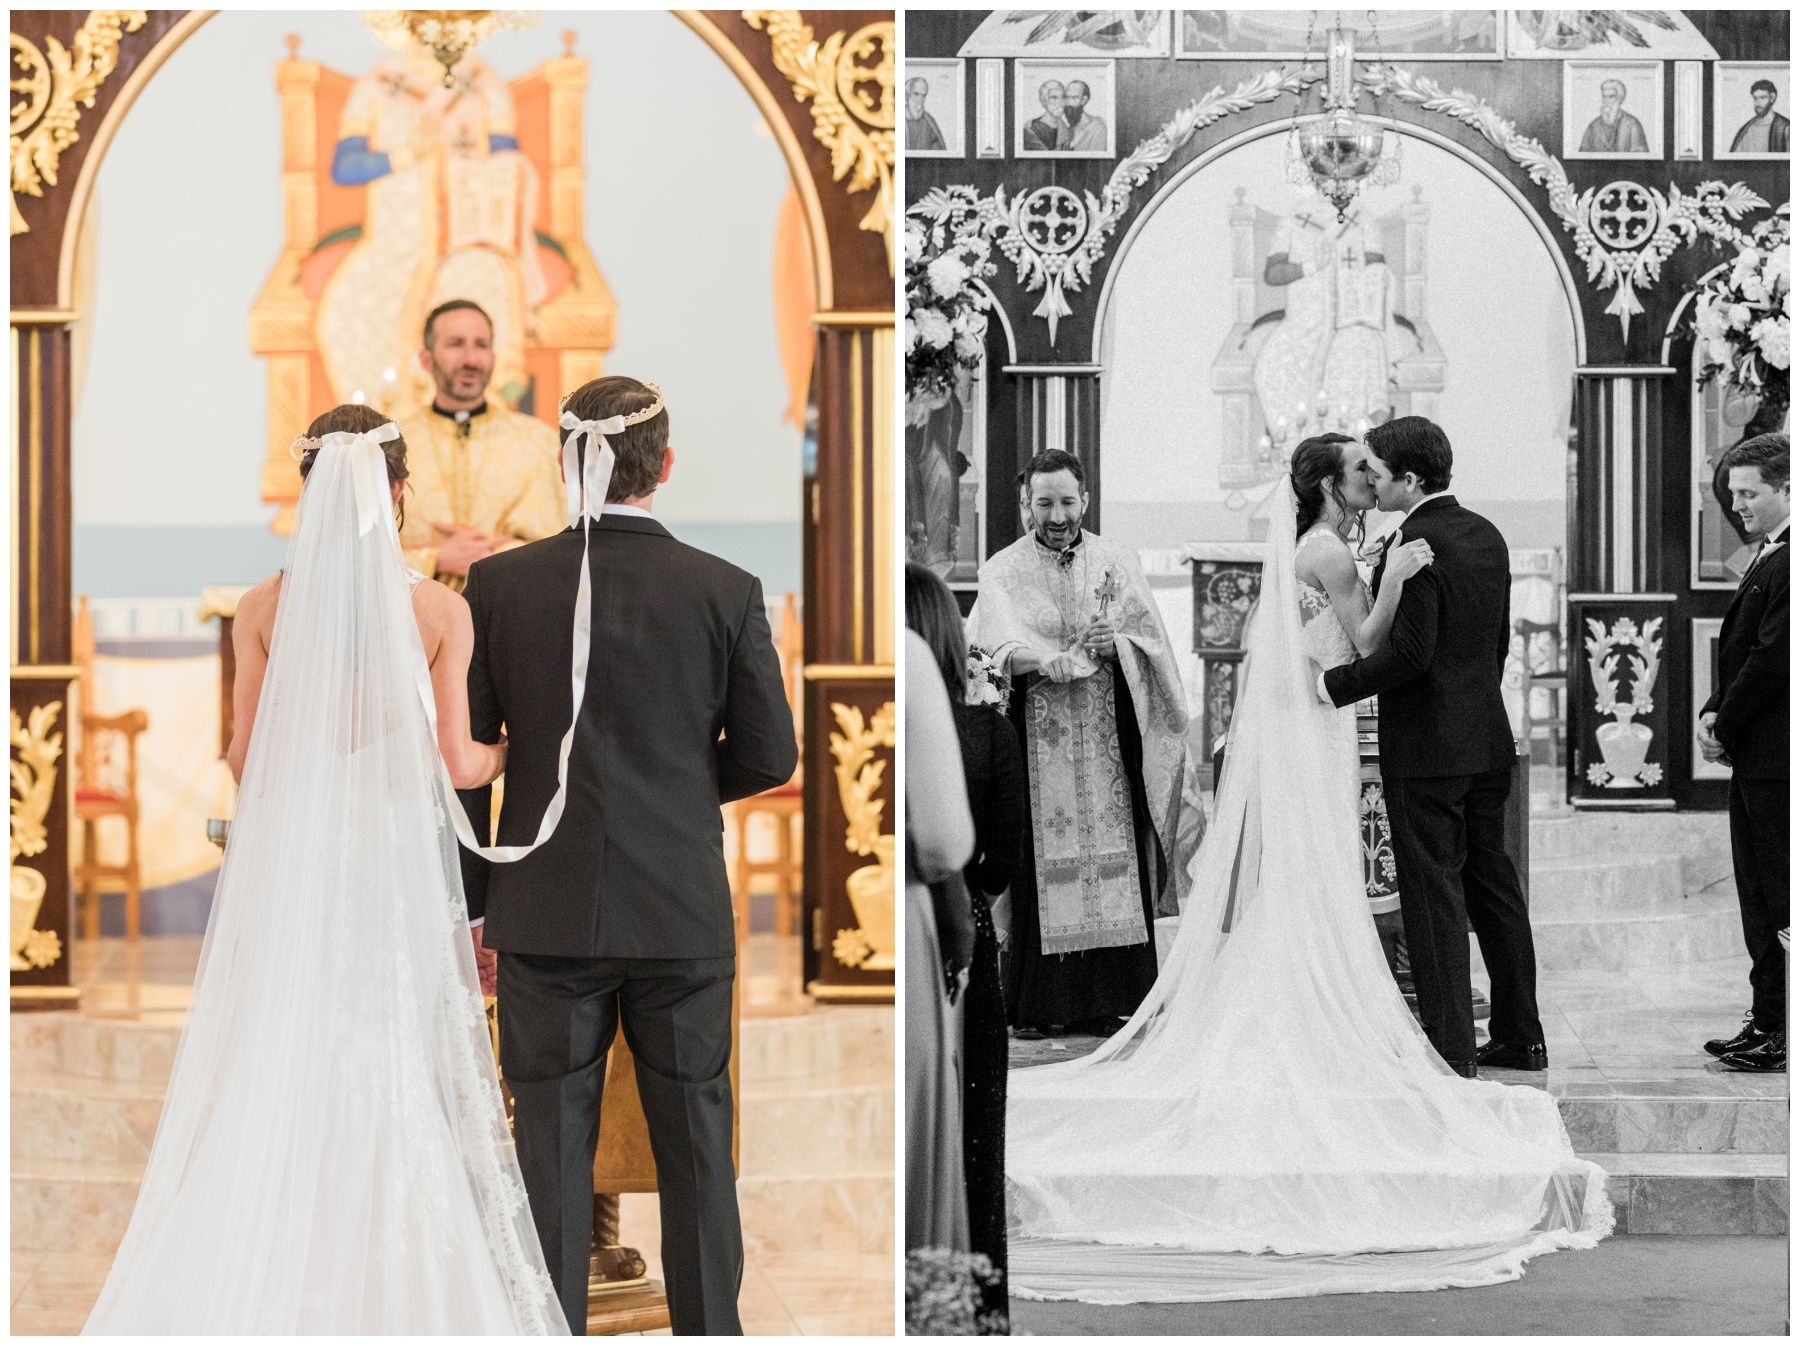 Traditional Orthodox wedding ceremony